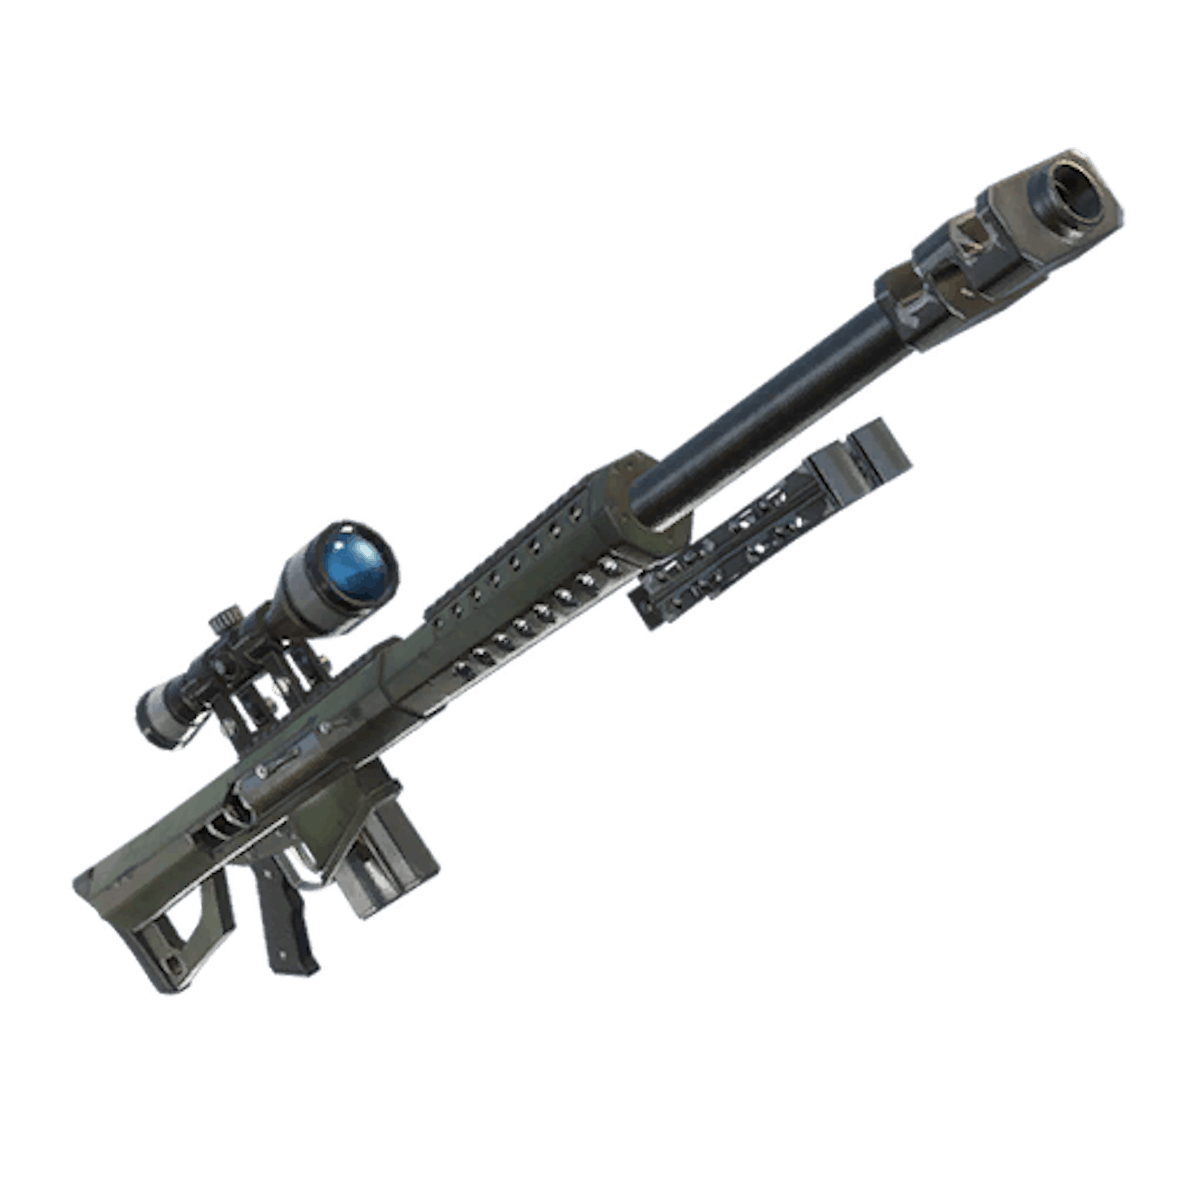 Fortnite Leaks New Heavy Sniper Rifle Will Shoot Through Walls - leaked heavy sniper rifle in fortnite will shoot through walls